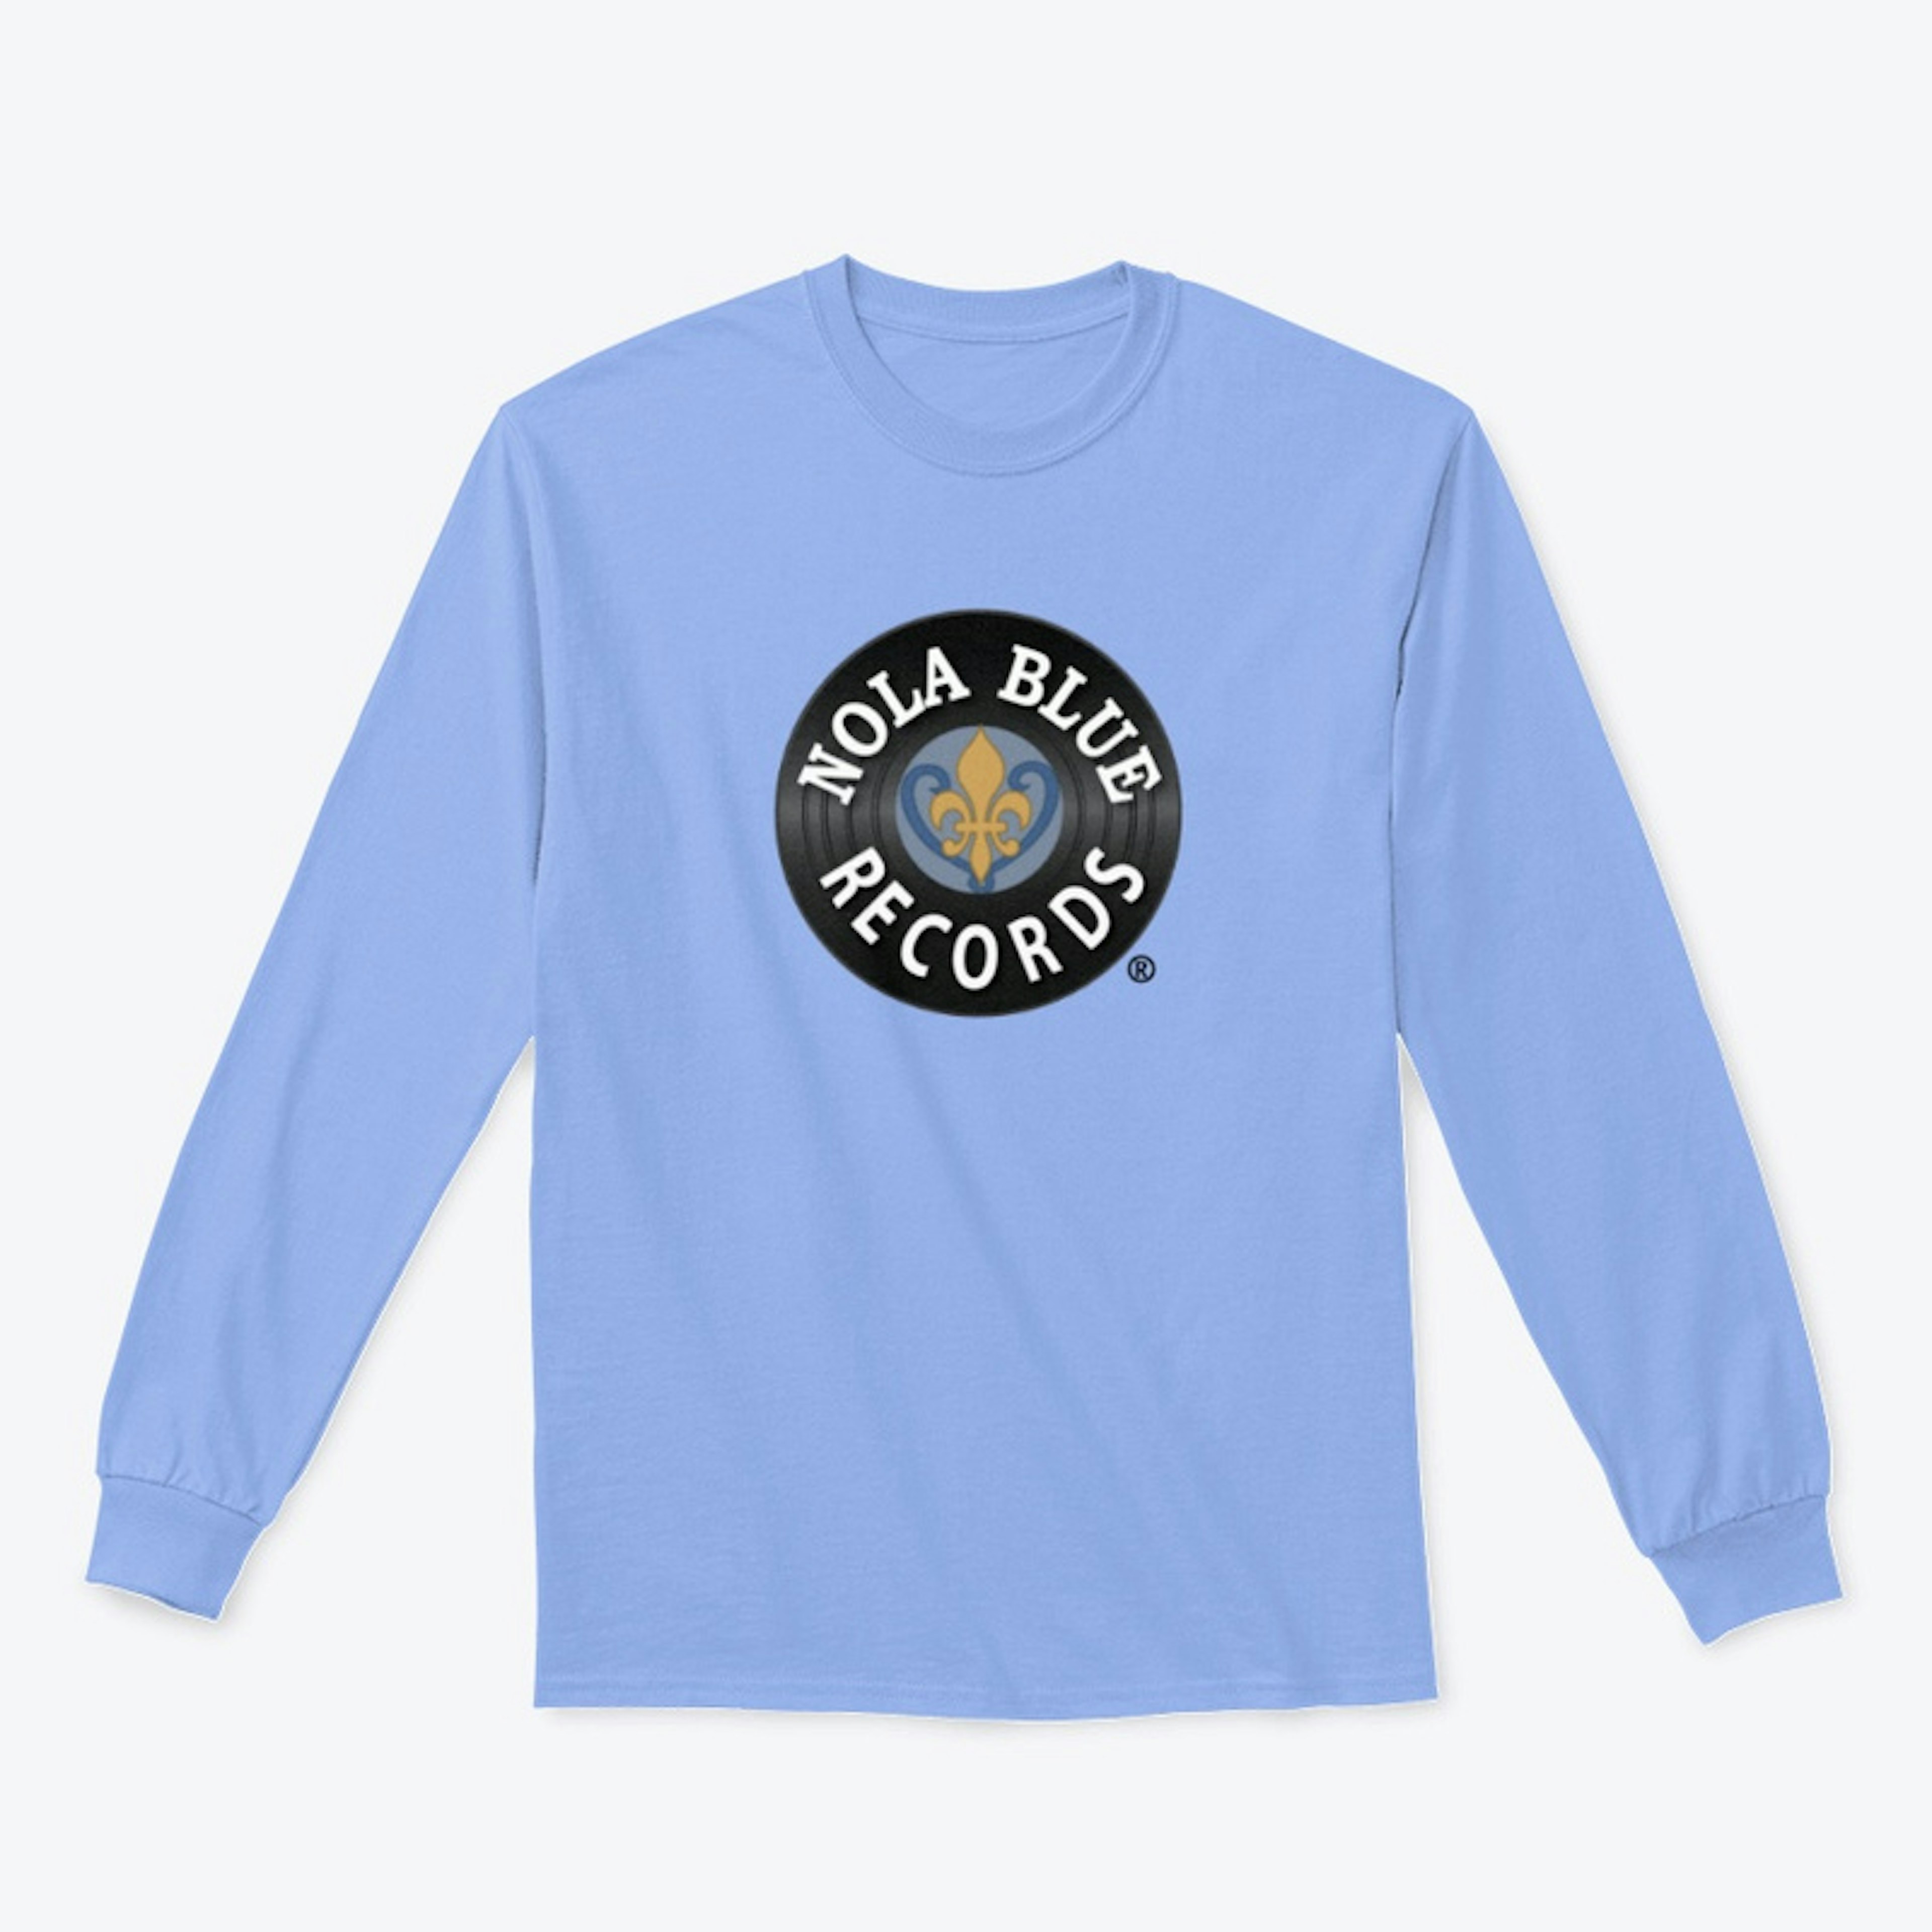 Nola Blue Records Long Sleeve T-Shirt